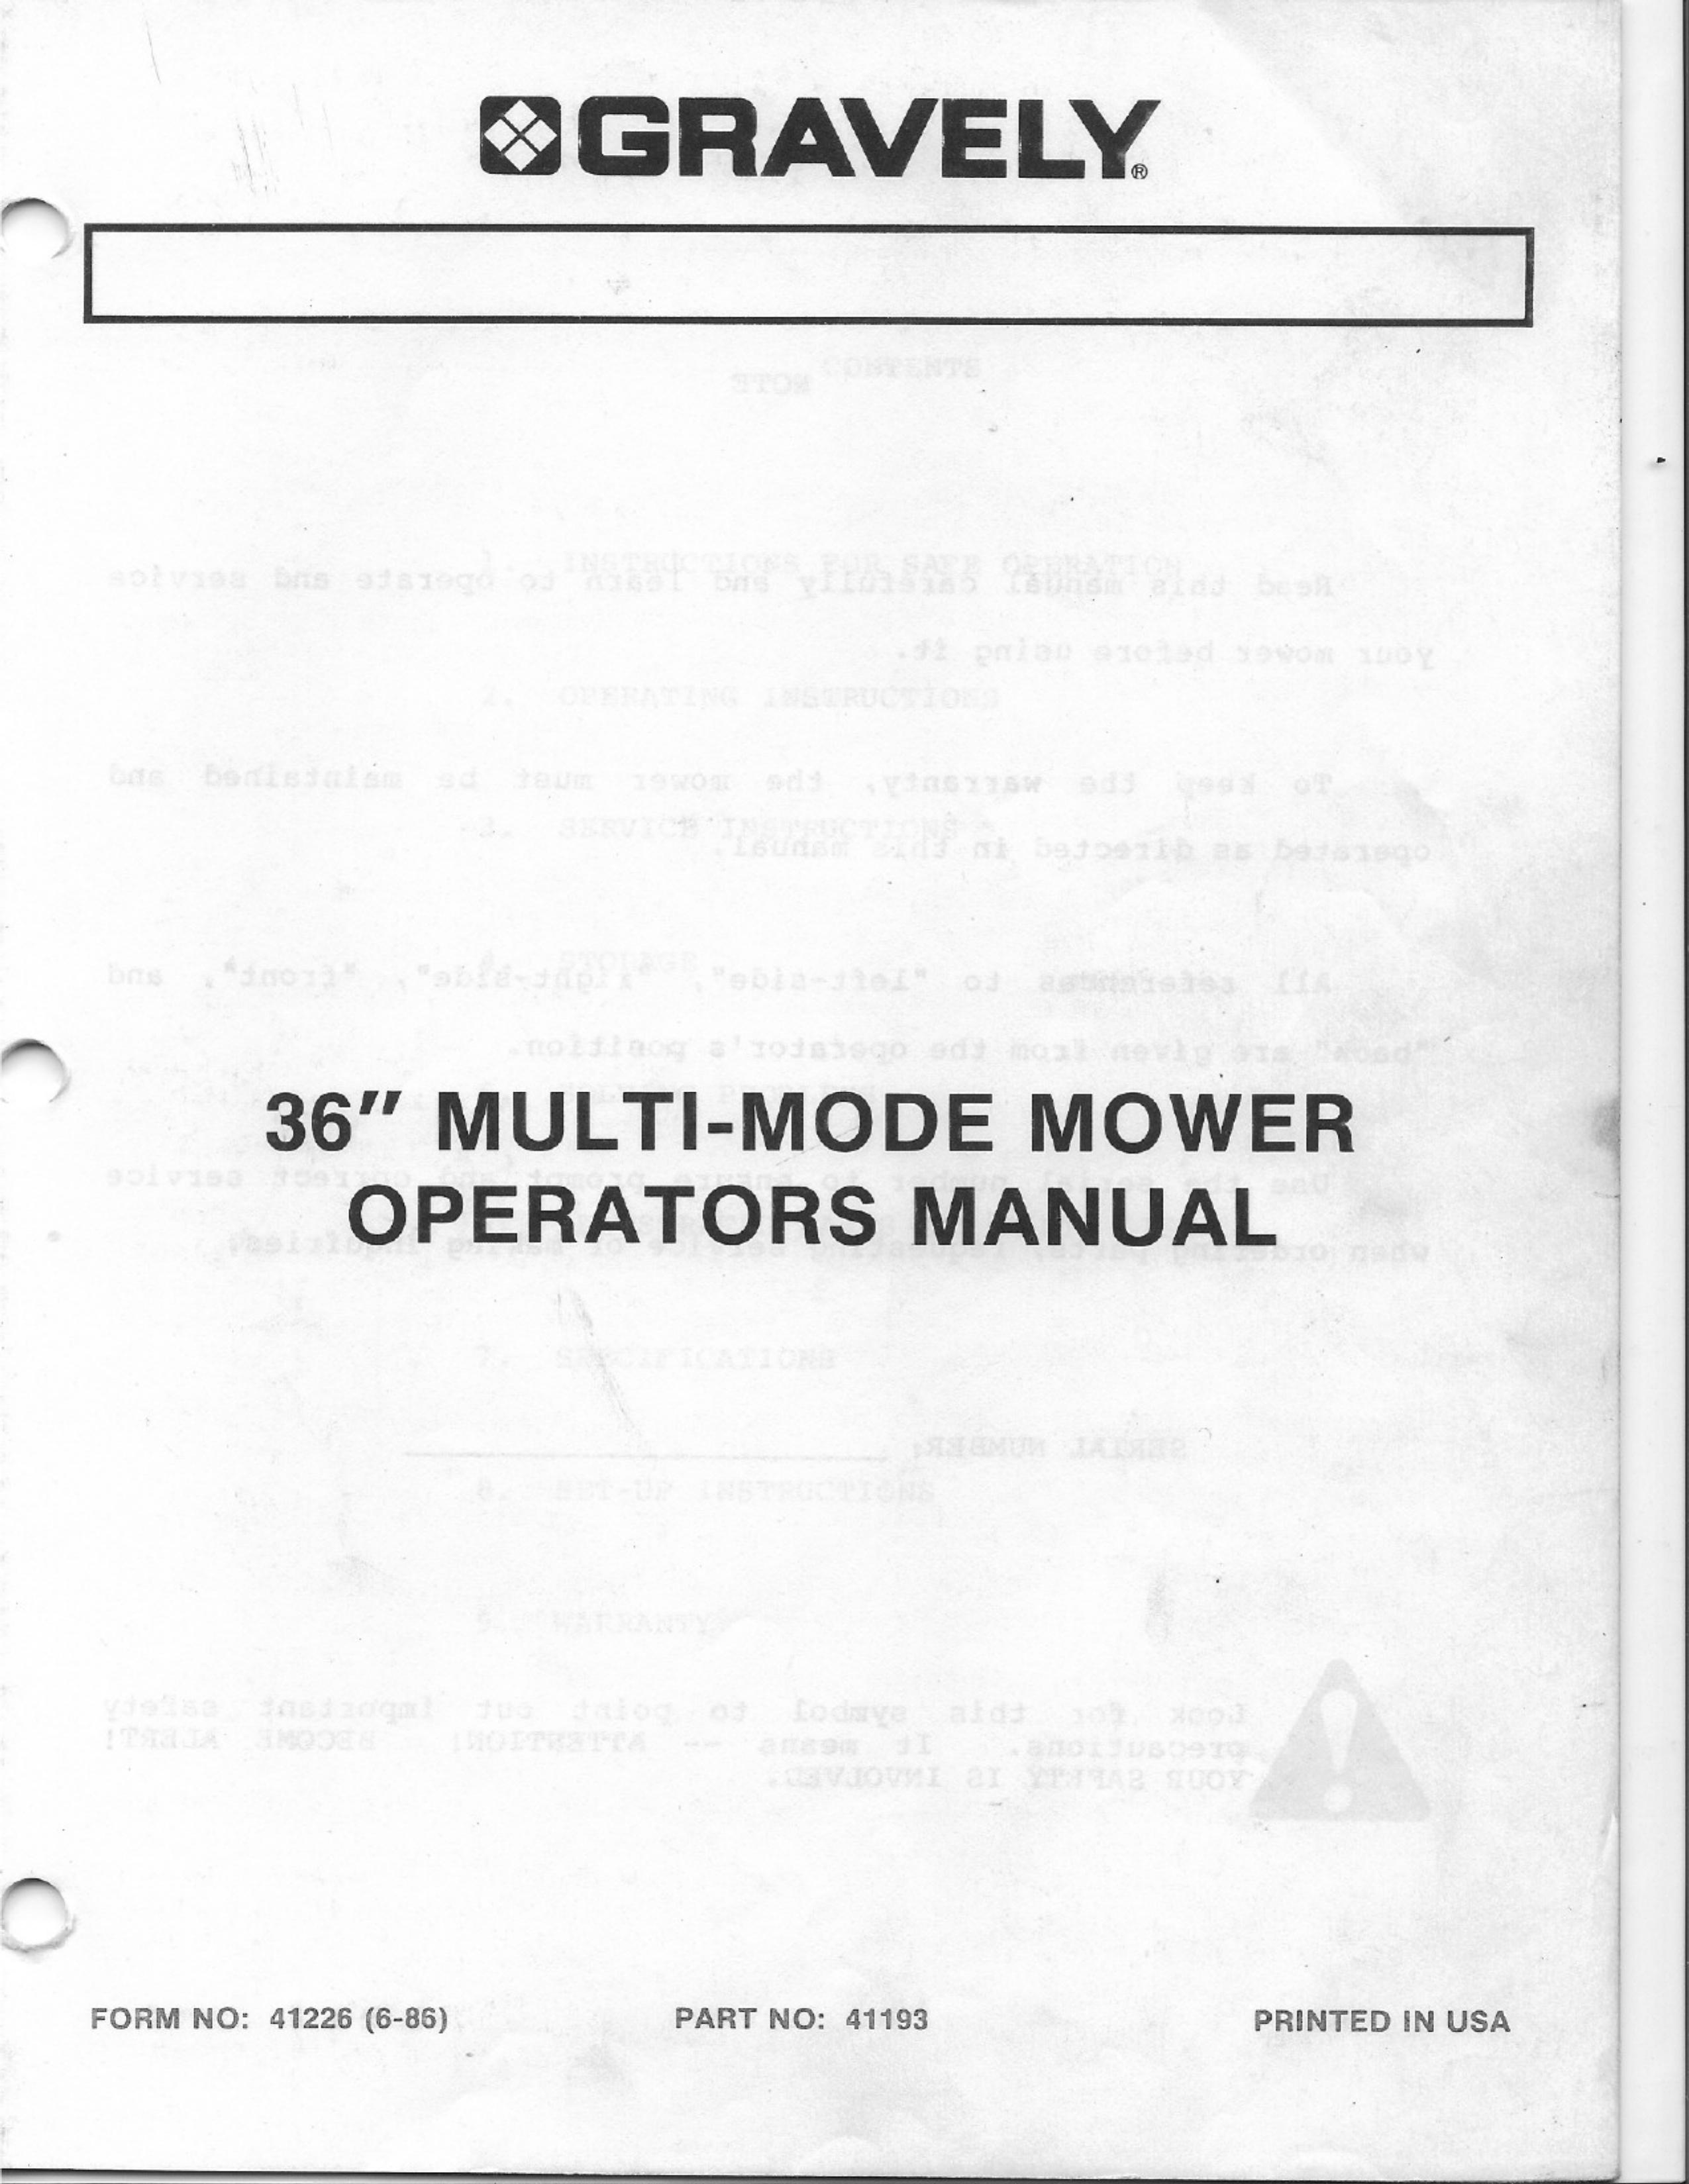 Gravely 41193 Lawn Mower User Manual